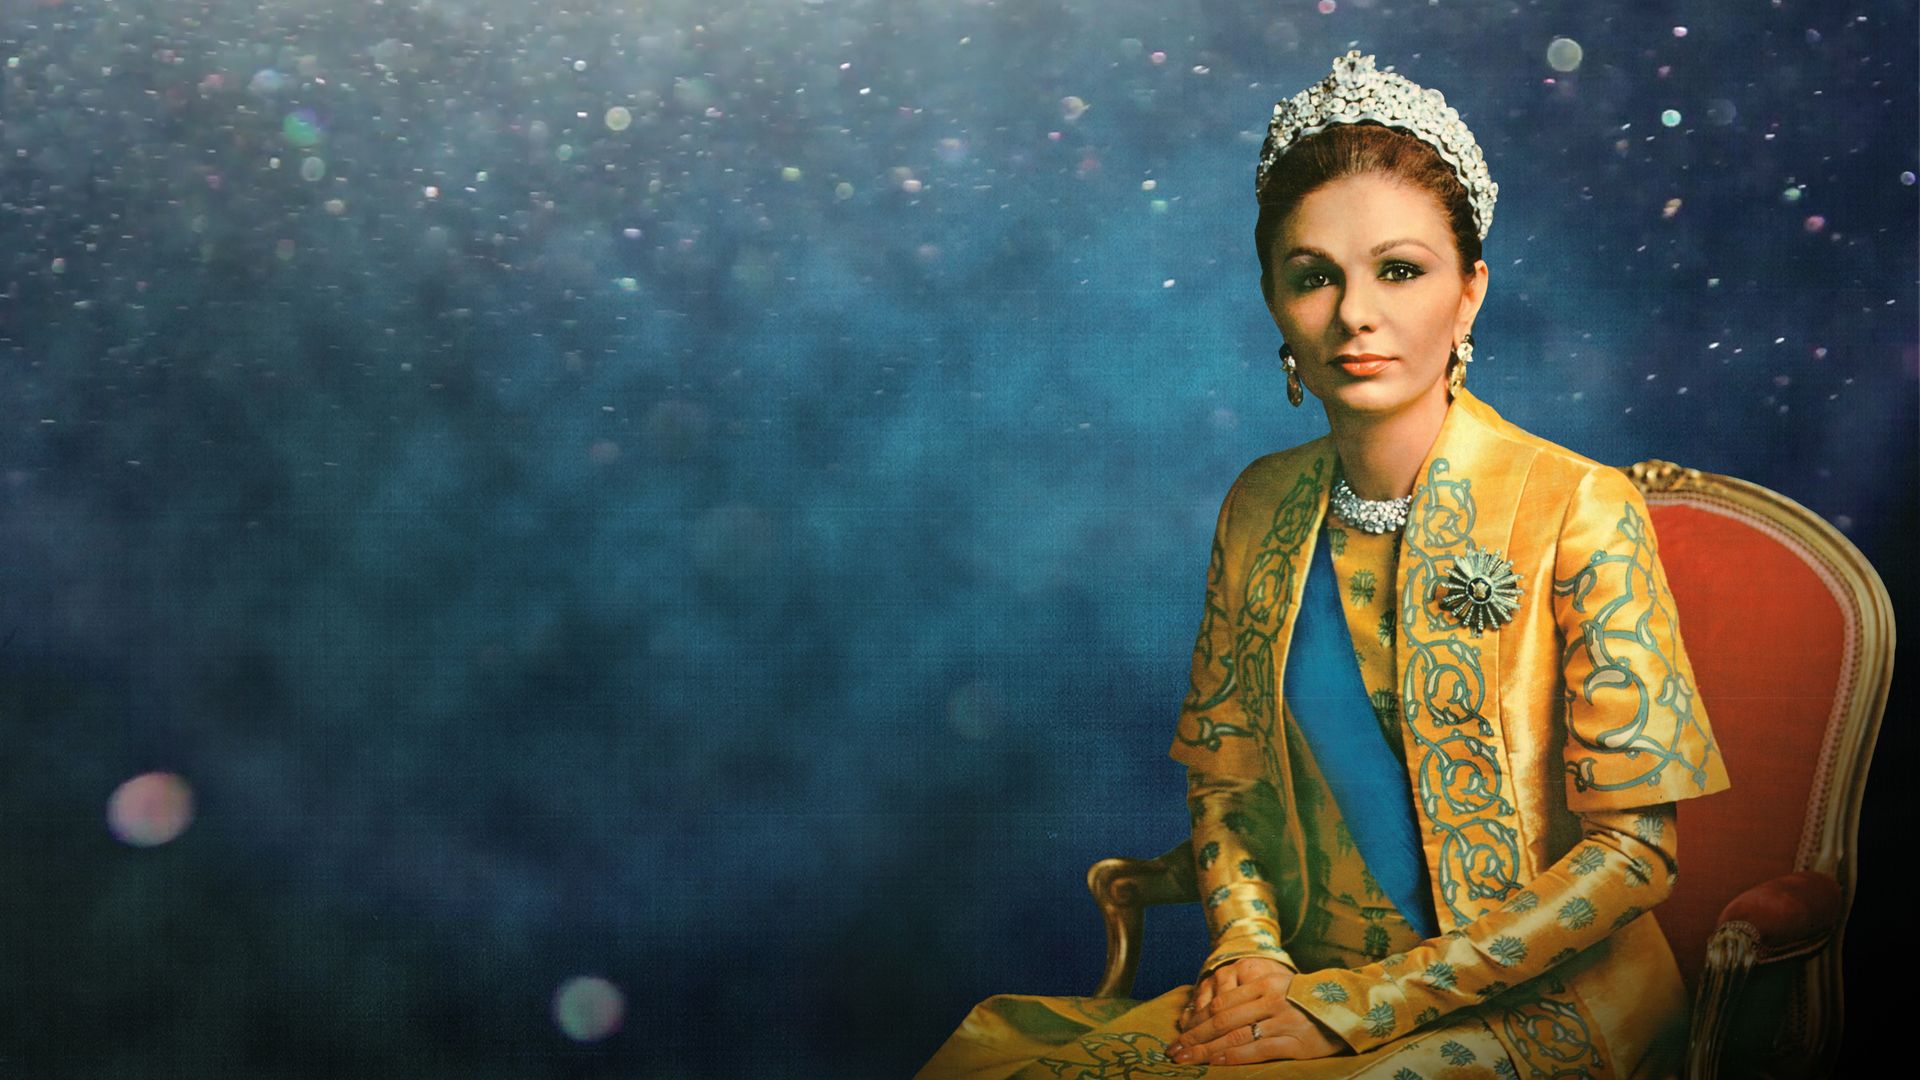 Farah Diba Pahlavi: The Last Empress